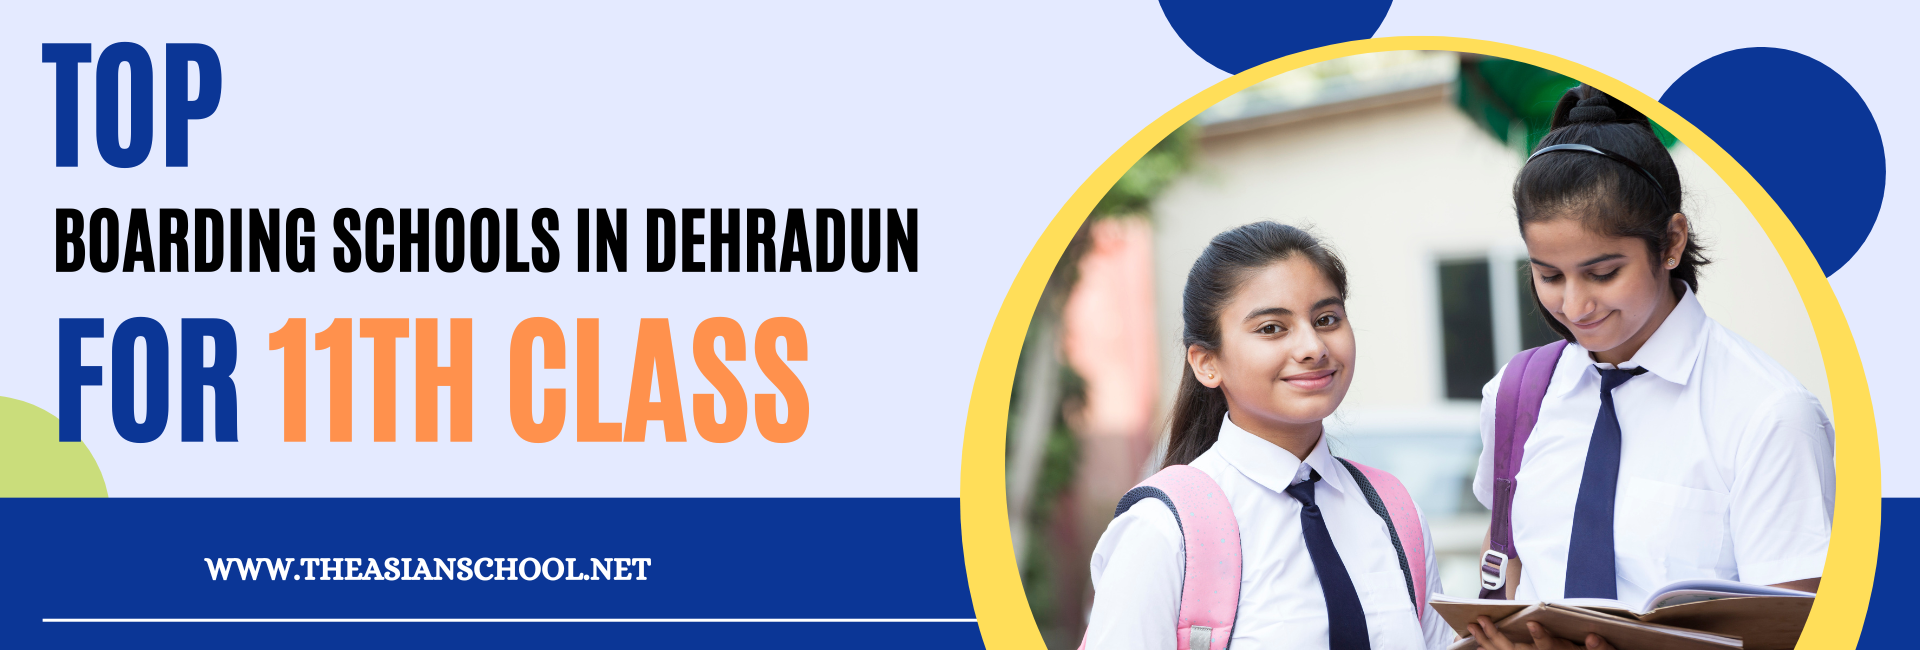 Top Boarding Schools in Dehradun For 11th Class